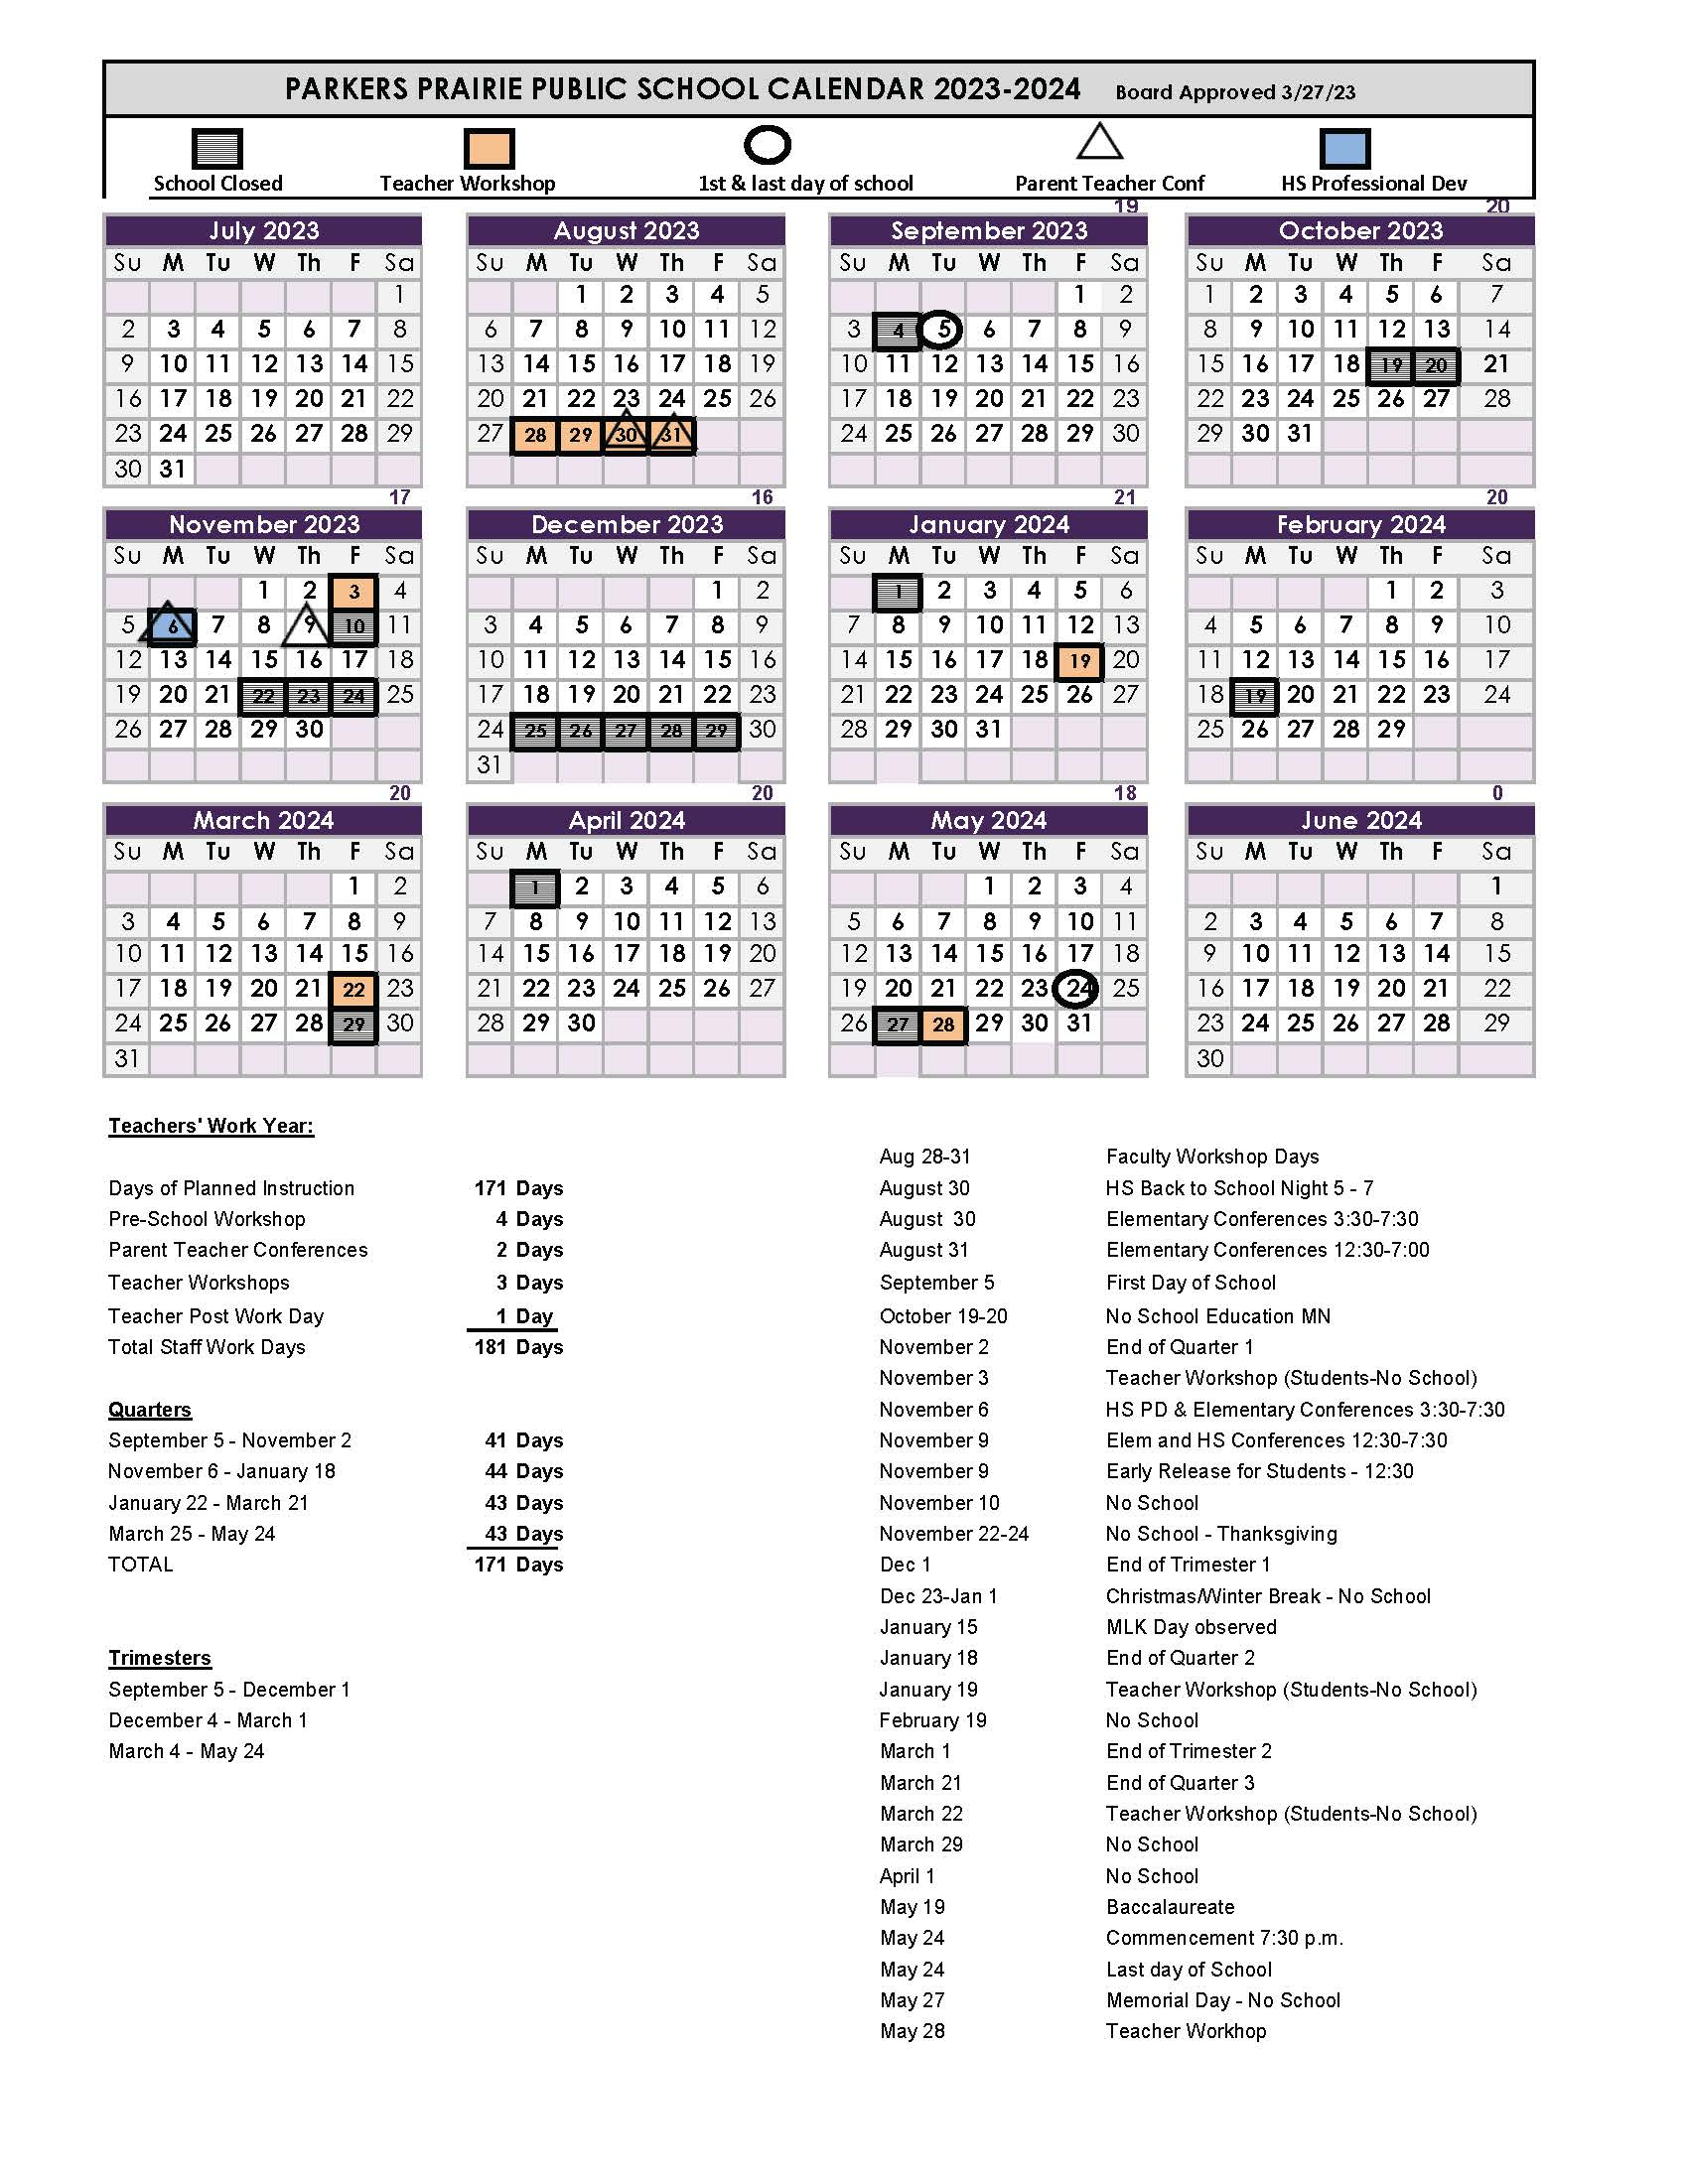 2023-24 Calendar, approved